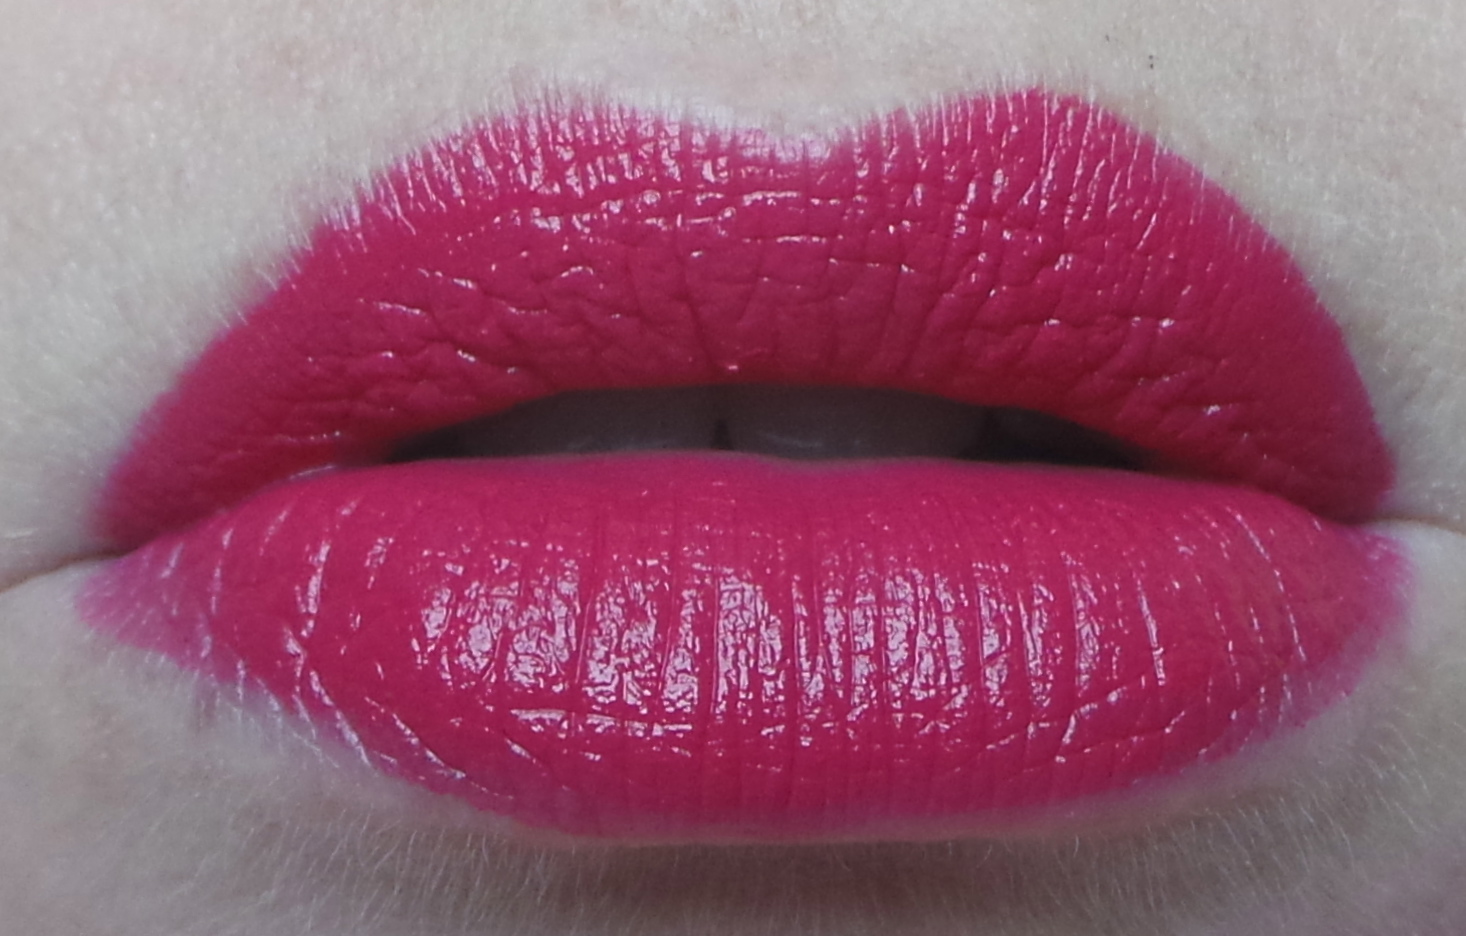 NARS Audacious lipstick in Greta 